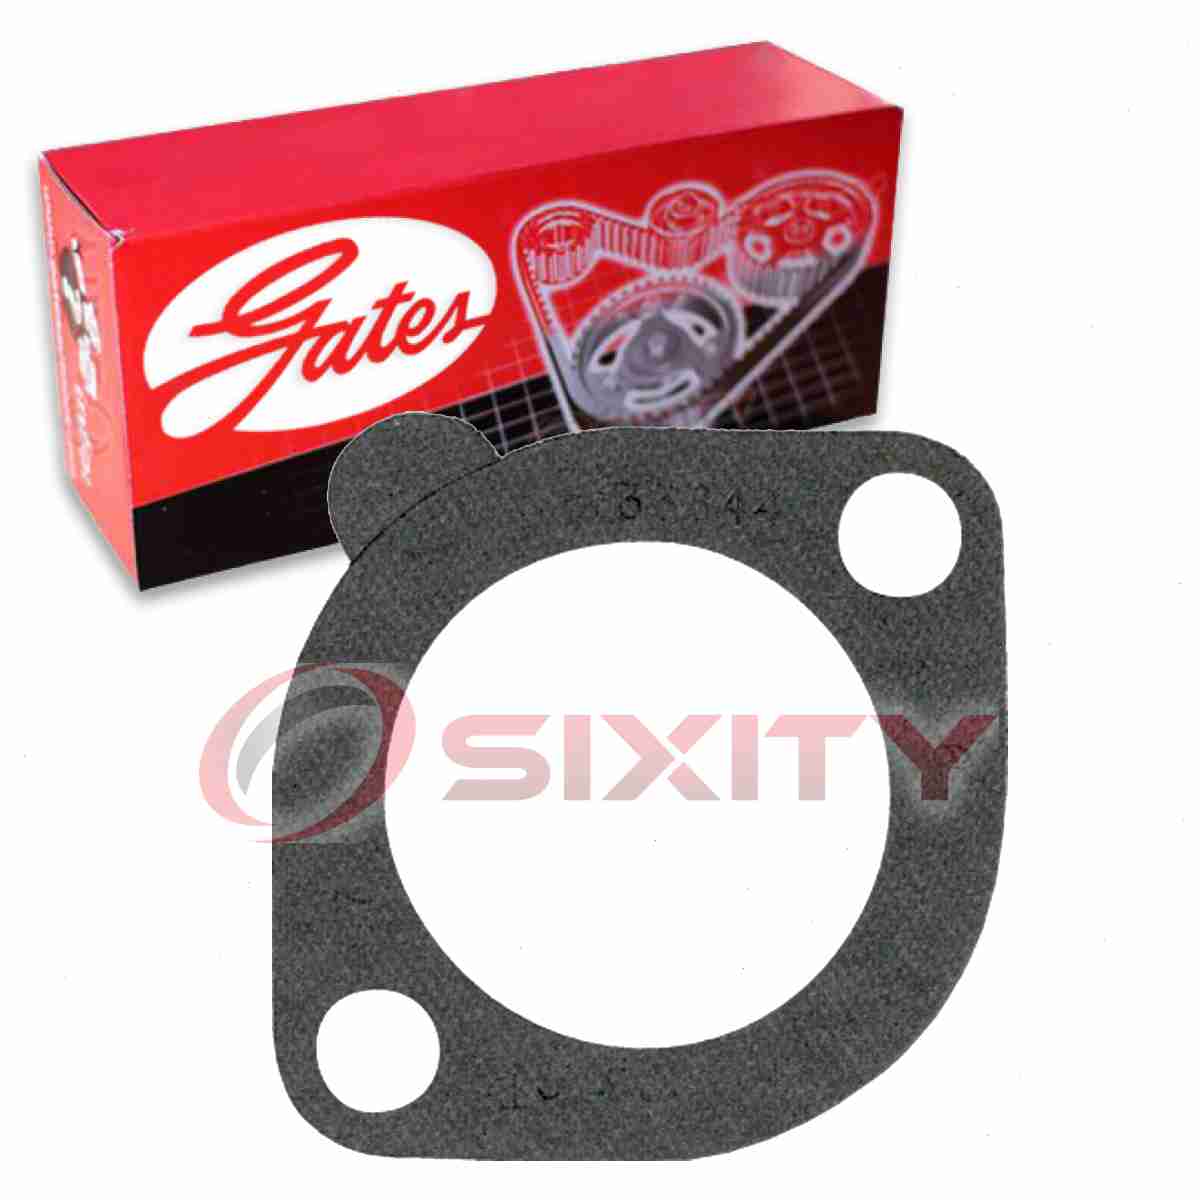 sixity auto parts